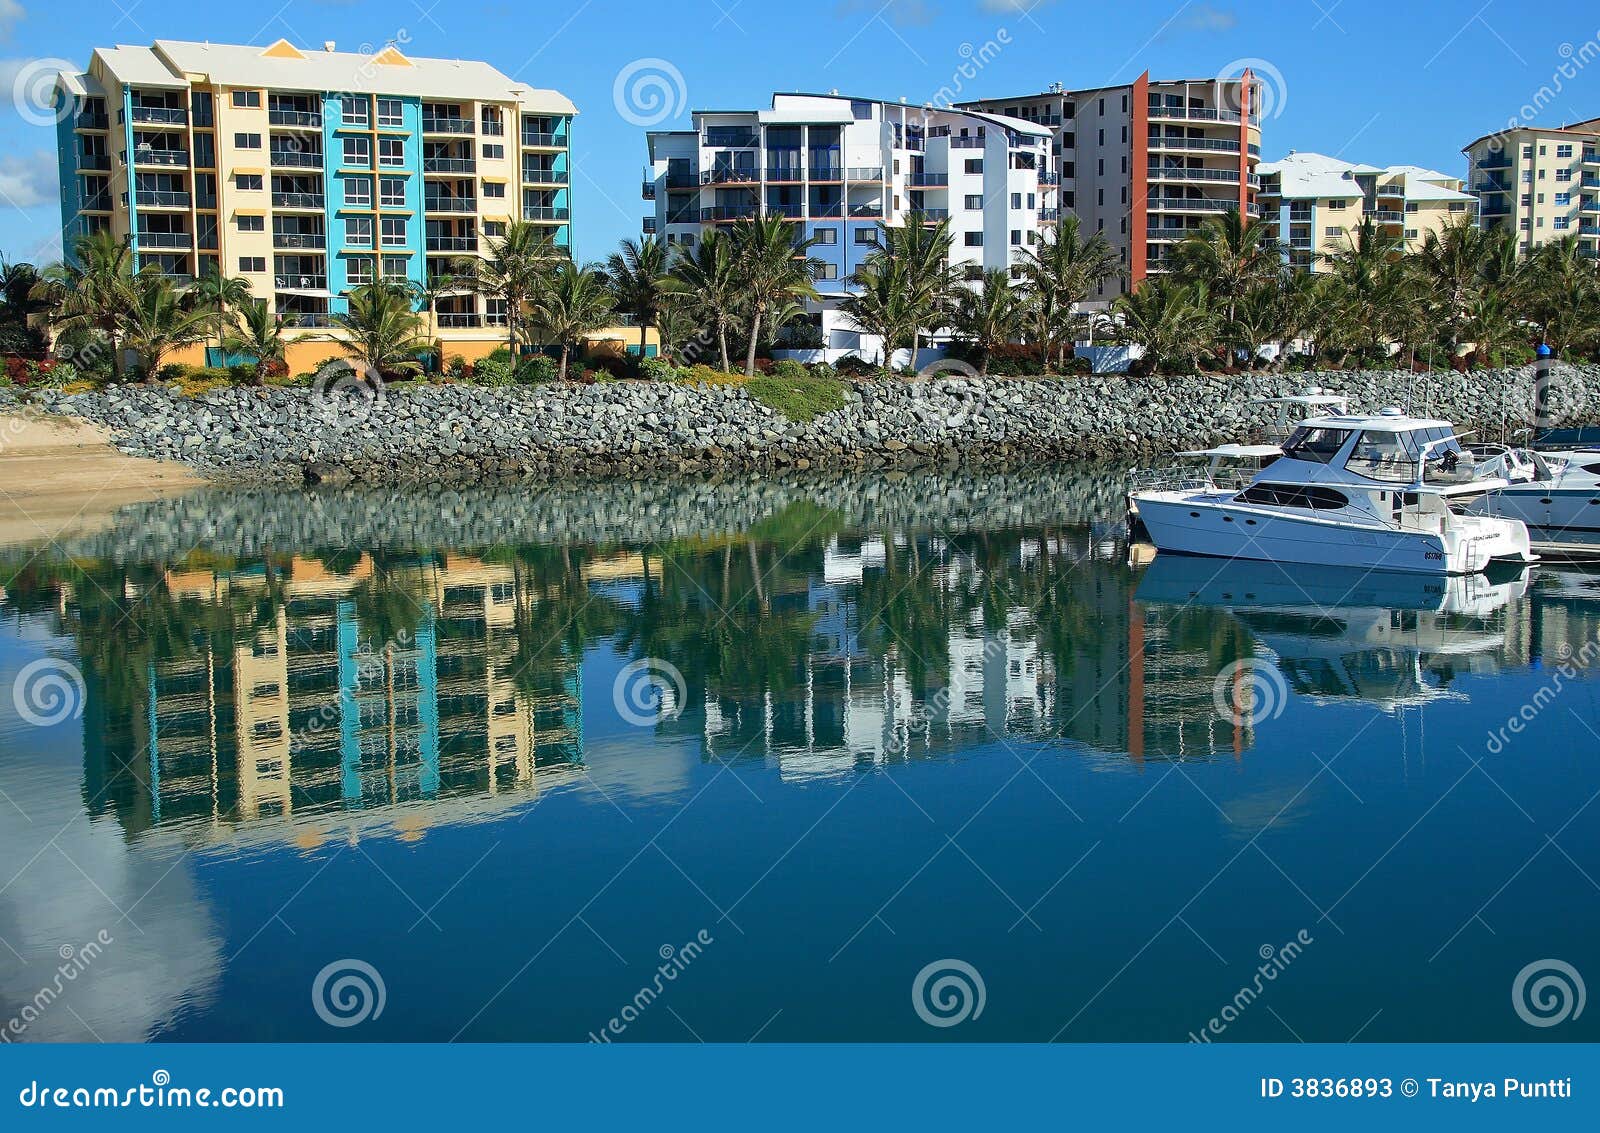 waterside apartments